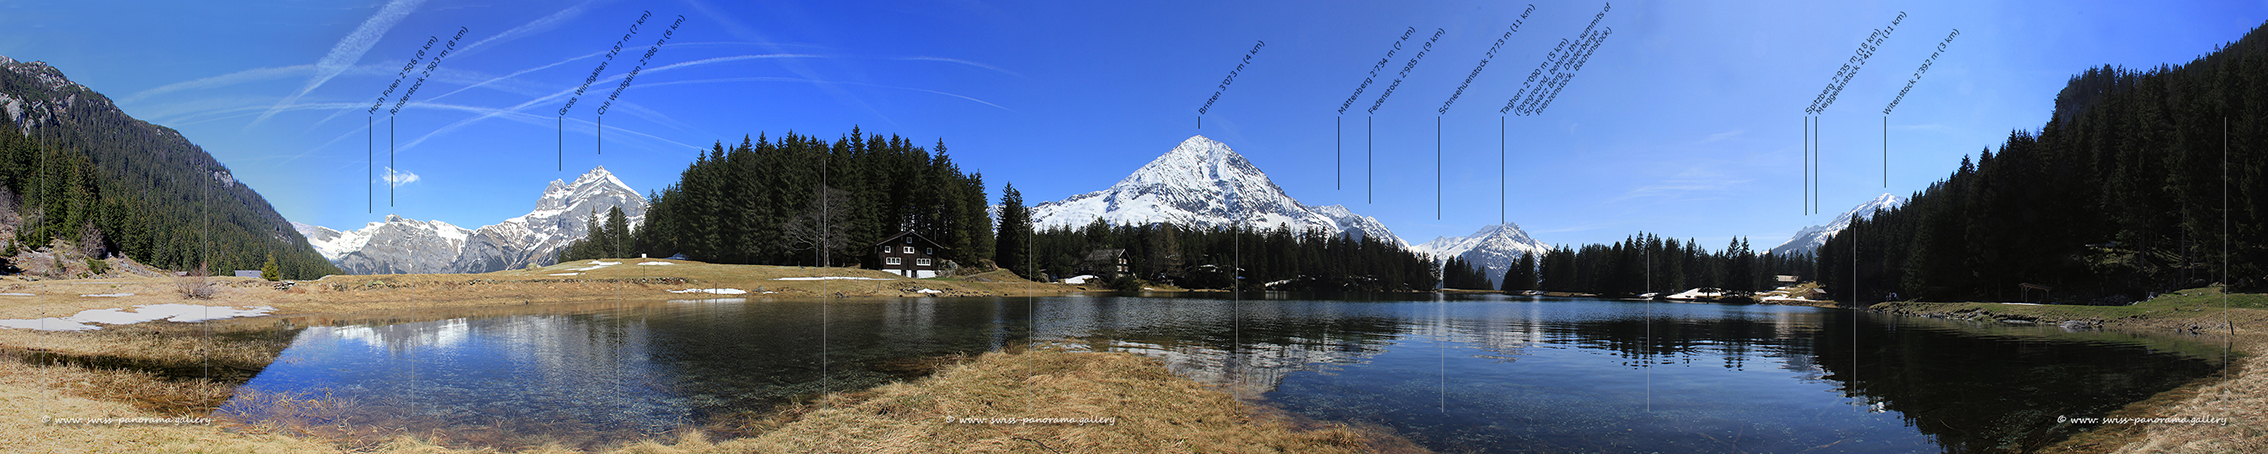 Intschi Amsteg Arnisee panorama Urner Alpen beschriftet Lake Arni